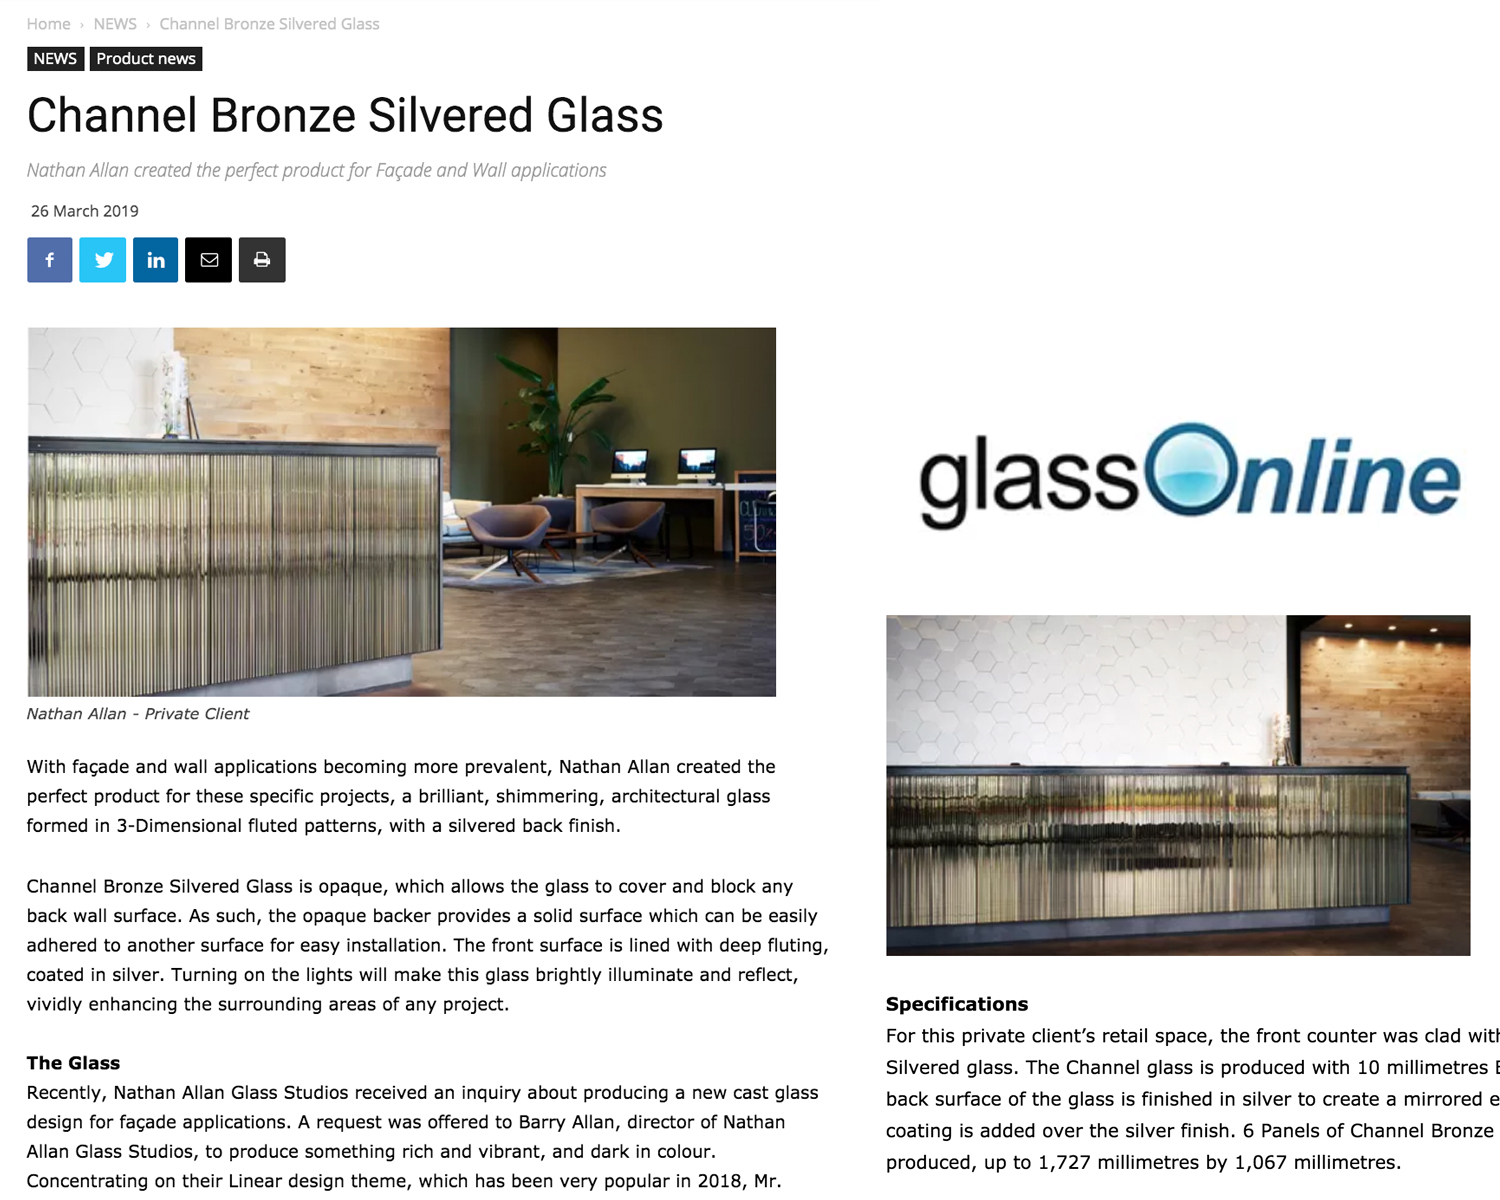 Glass Online | Channel Bronze Silvered Glass